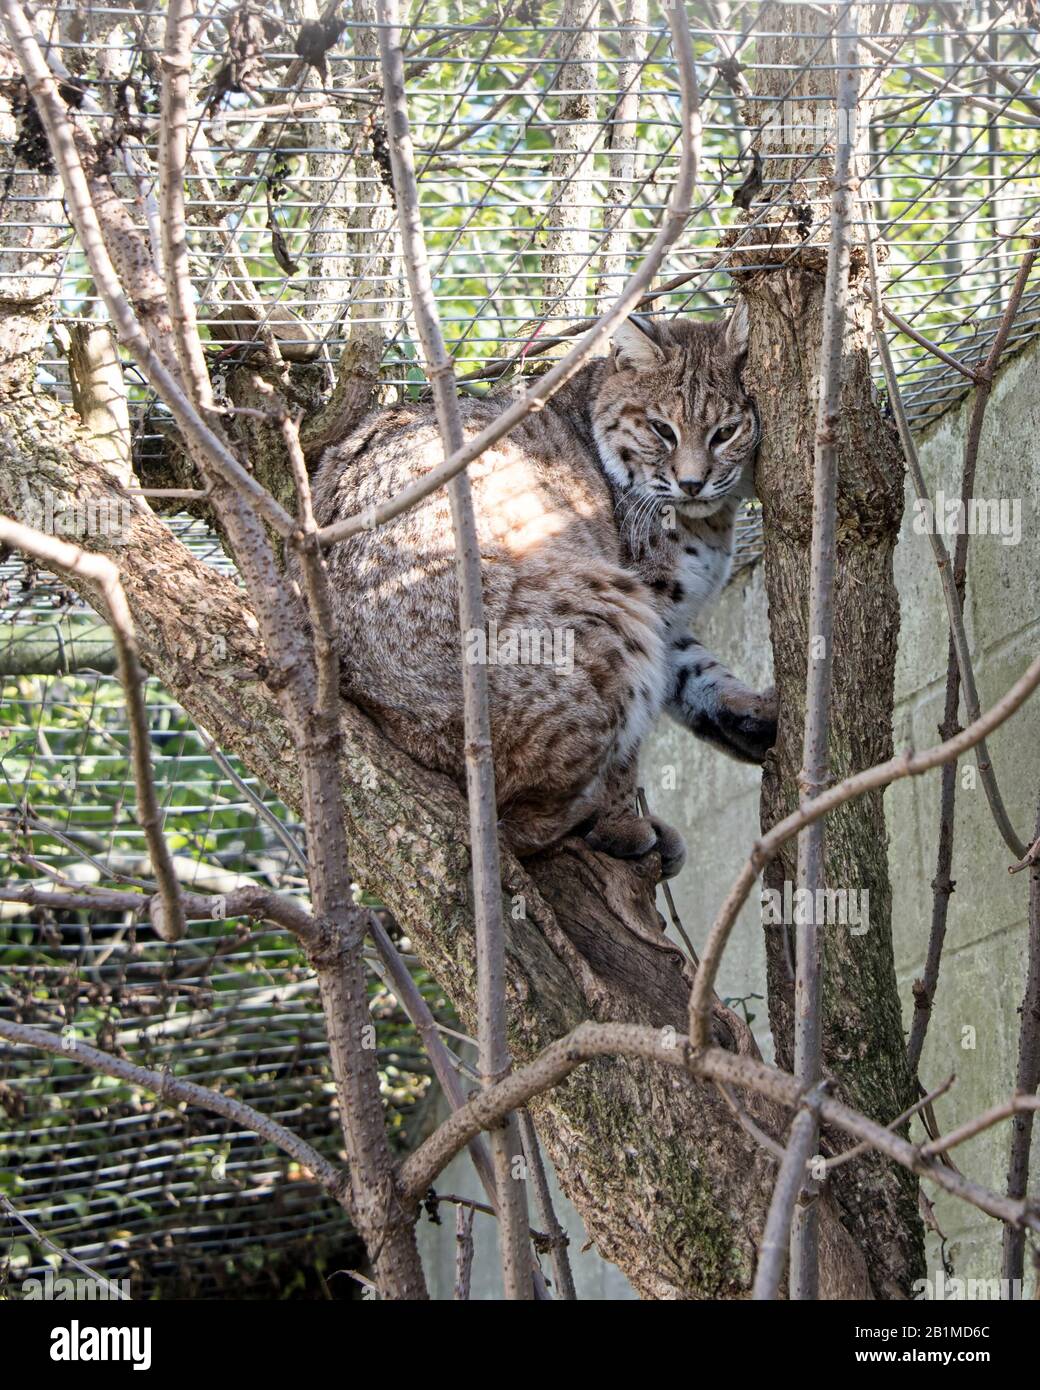 UK, Welwyn - October 2017: Asian wildcat in captivity - sitting in a tree Stock Photo